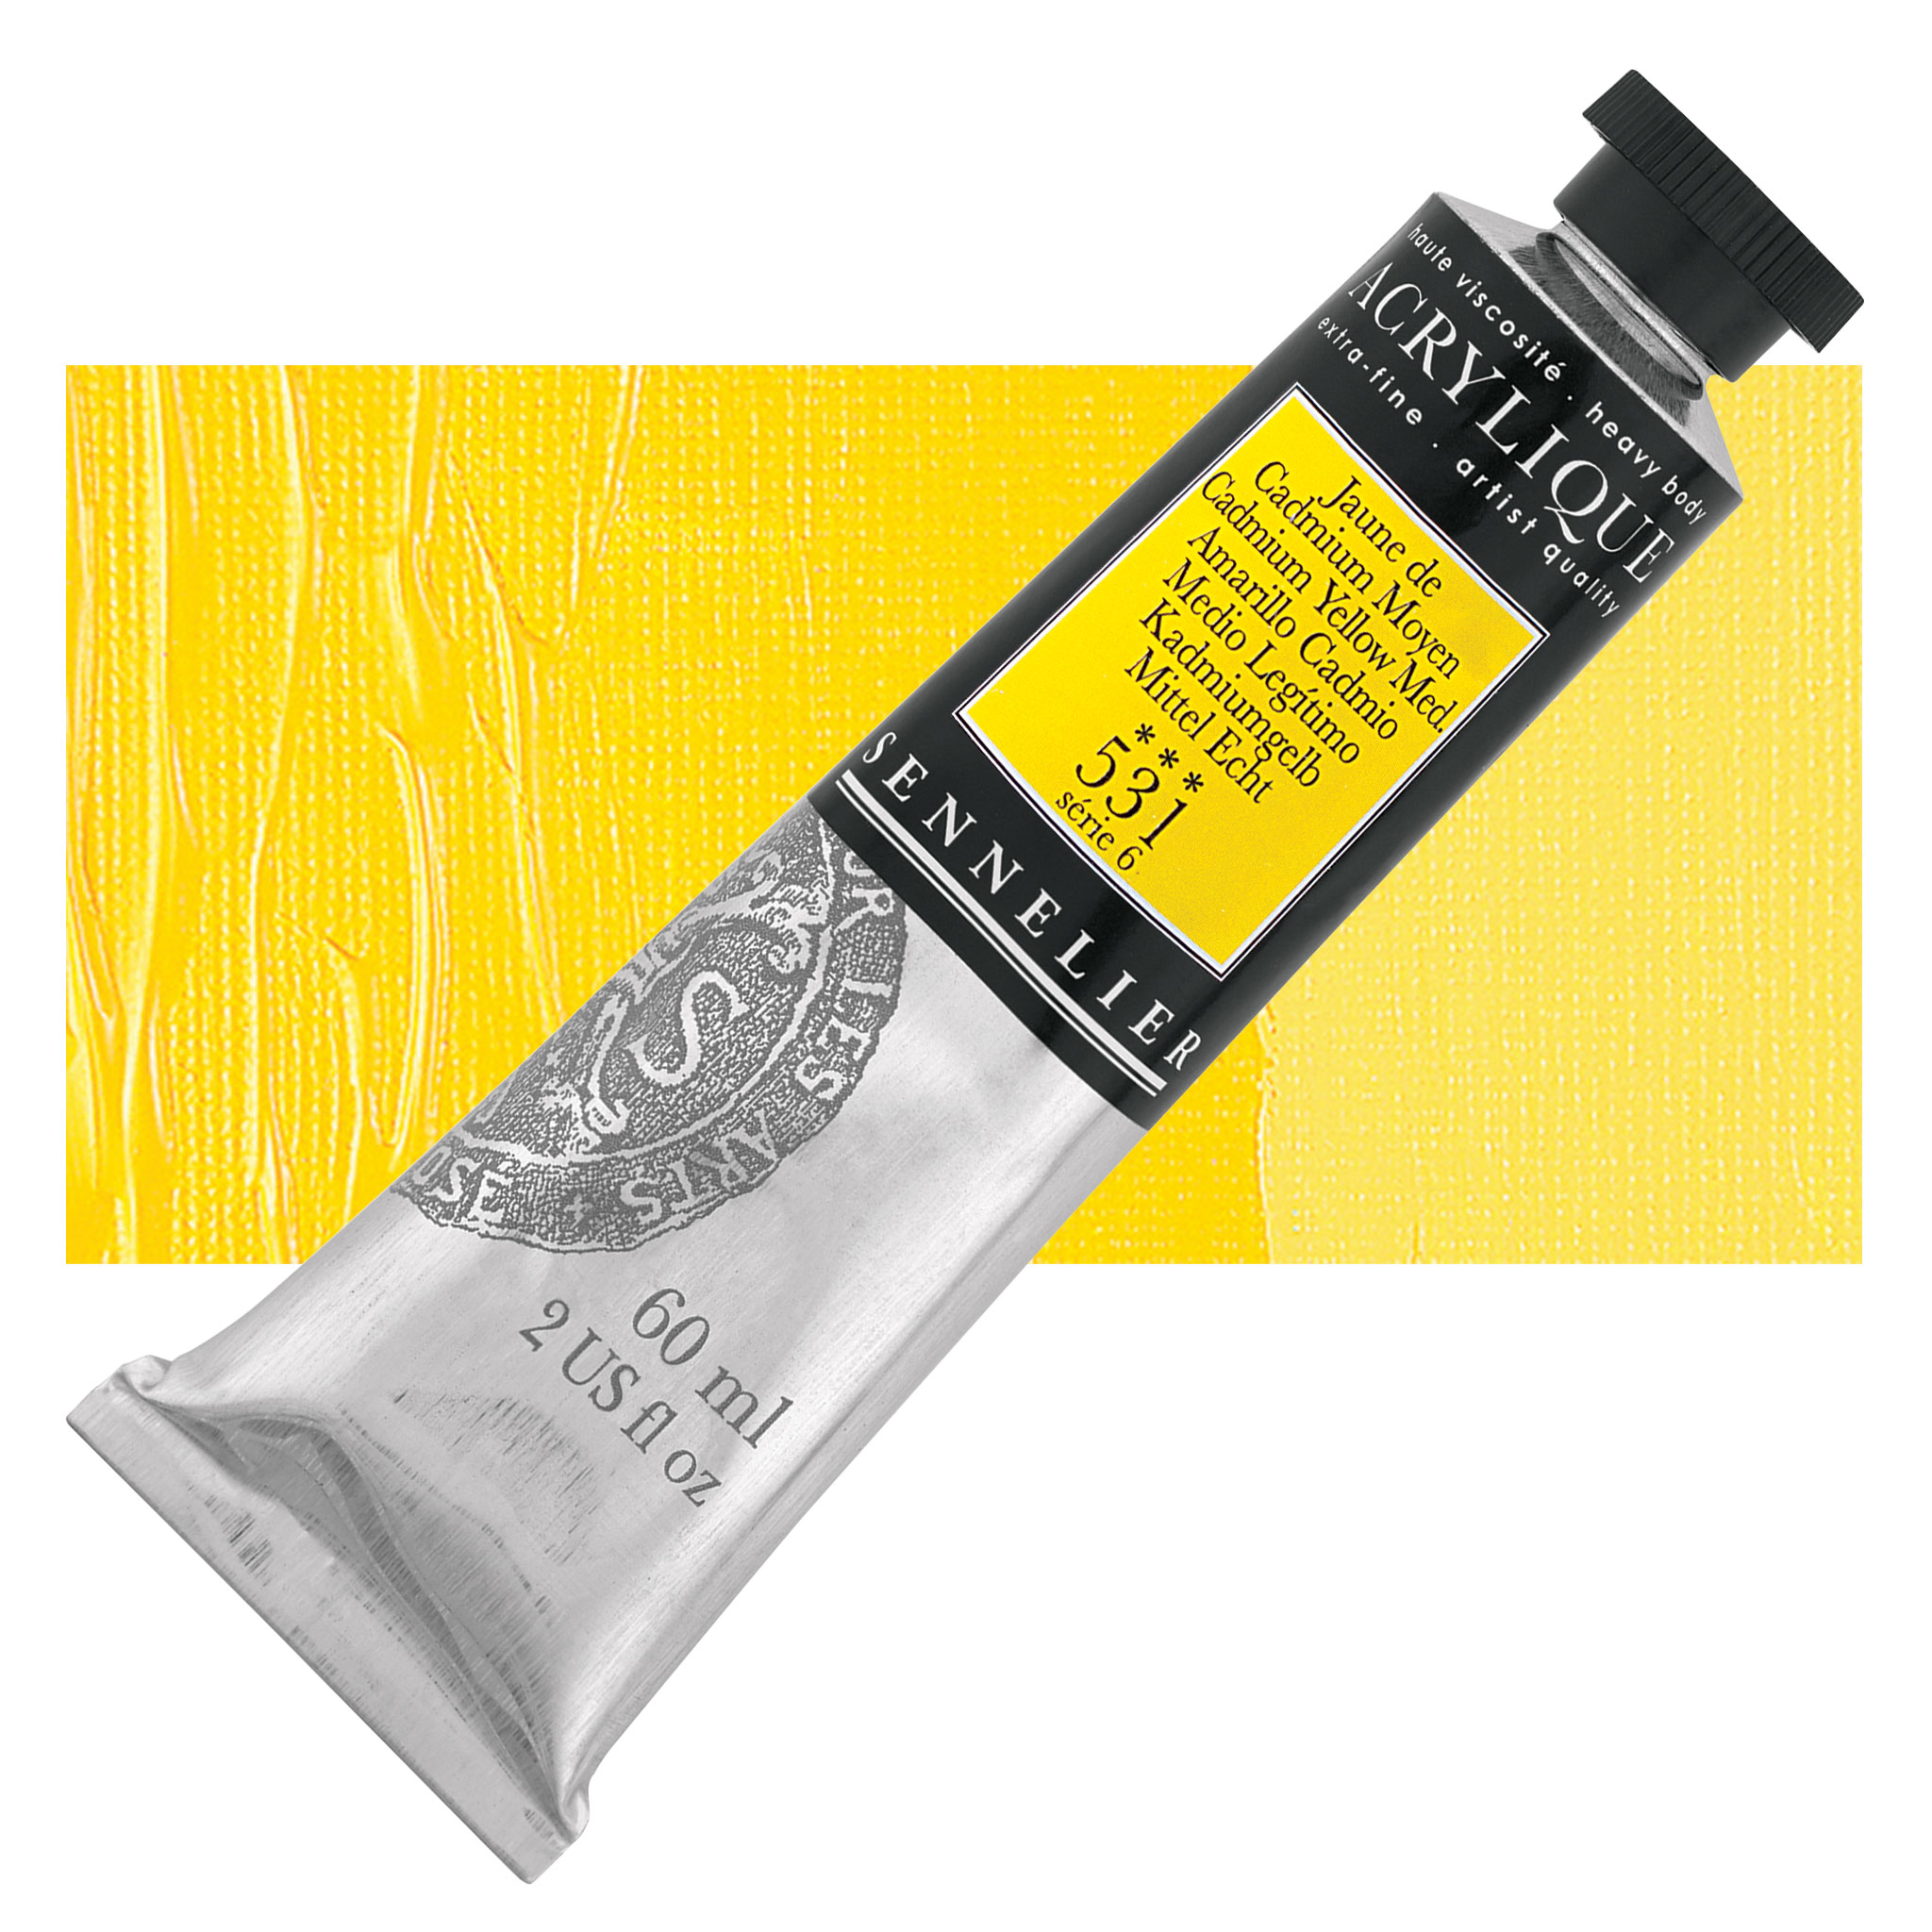 Sennelier Extra-Fine Artist Acryliques - Cadmium Yellow Medium, 60 ml tube